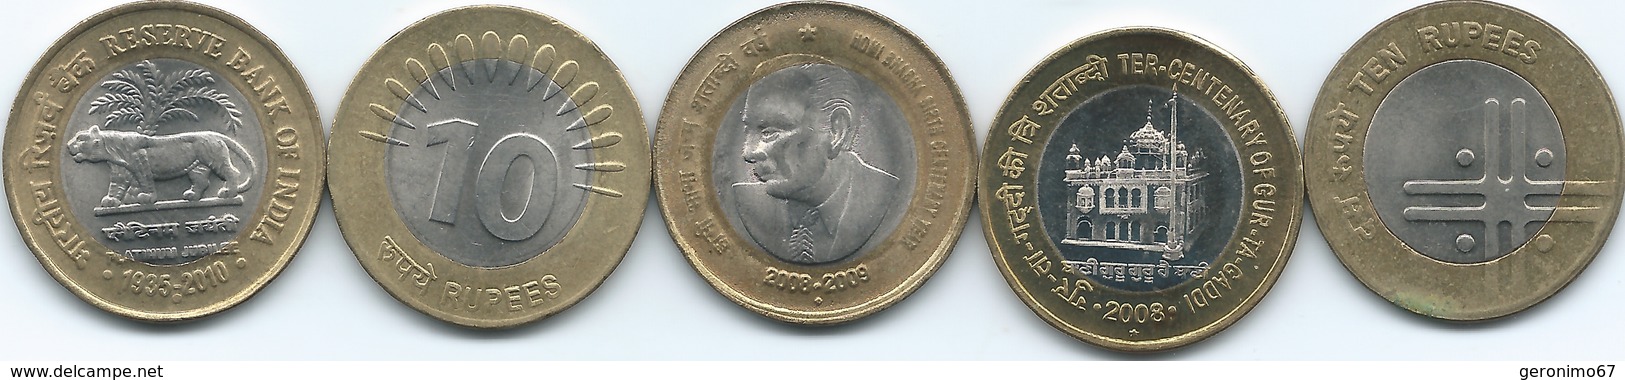 10 Rupees - 2006 (KM353) 2008 (KM363) 2009 (KM371 & KM272) 2010 (KM388) - India